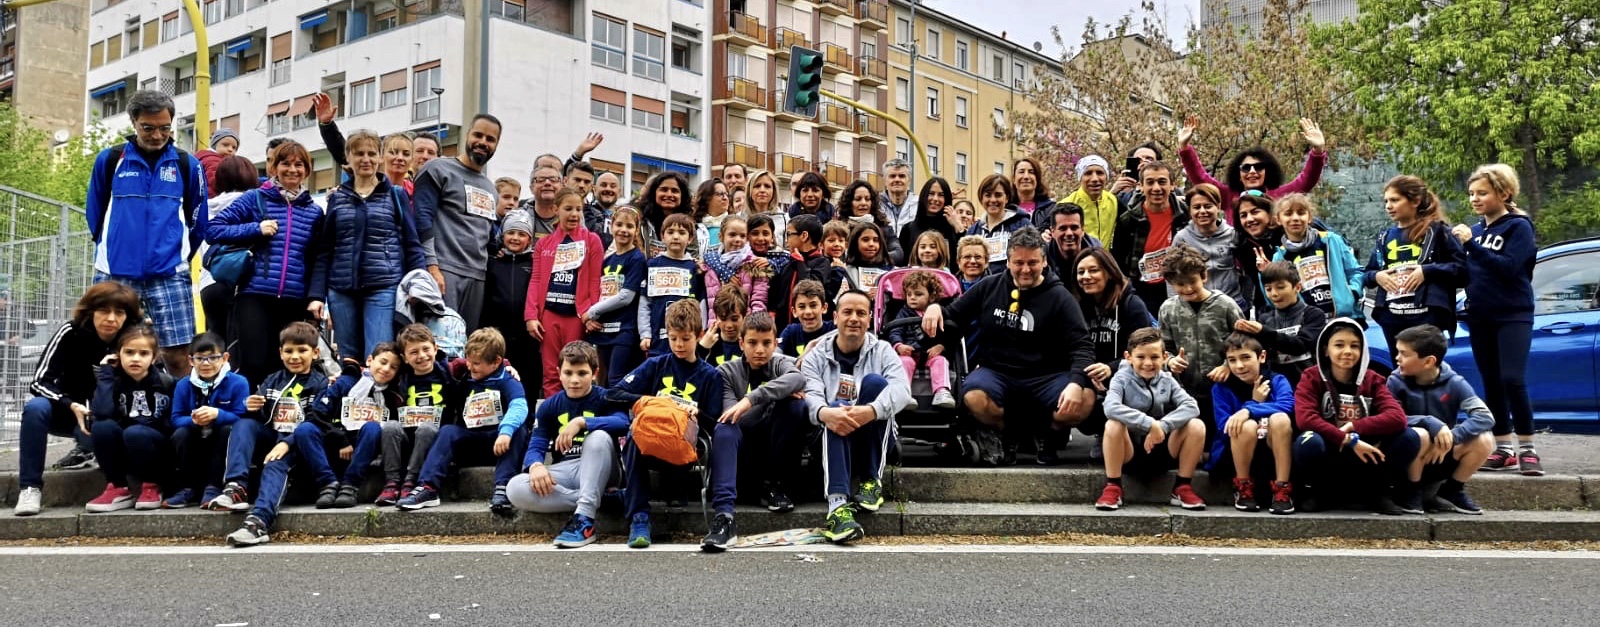 Istituto San Giuseppe La Salle Milano Bridgestone School Marathon 2019_1